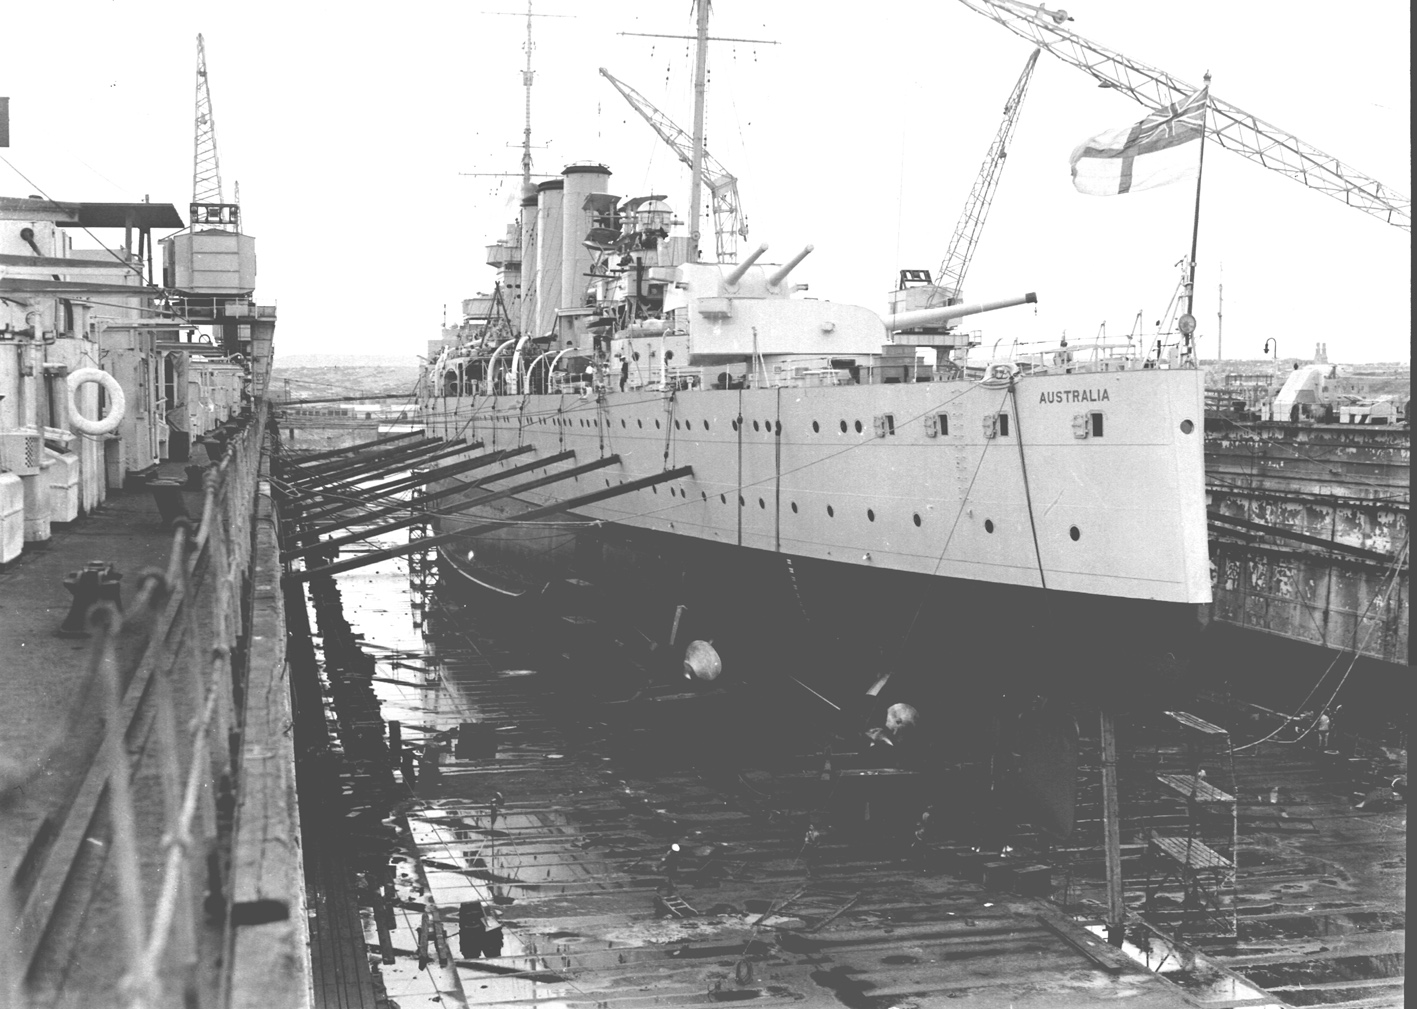 HMAS Australia in drydock circa 1938. Photo by Saxon Fogarty RAN. View full size.